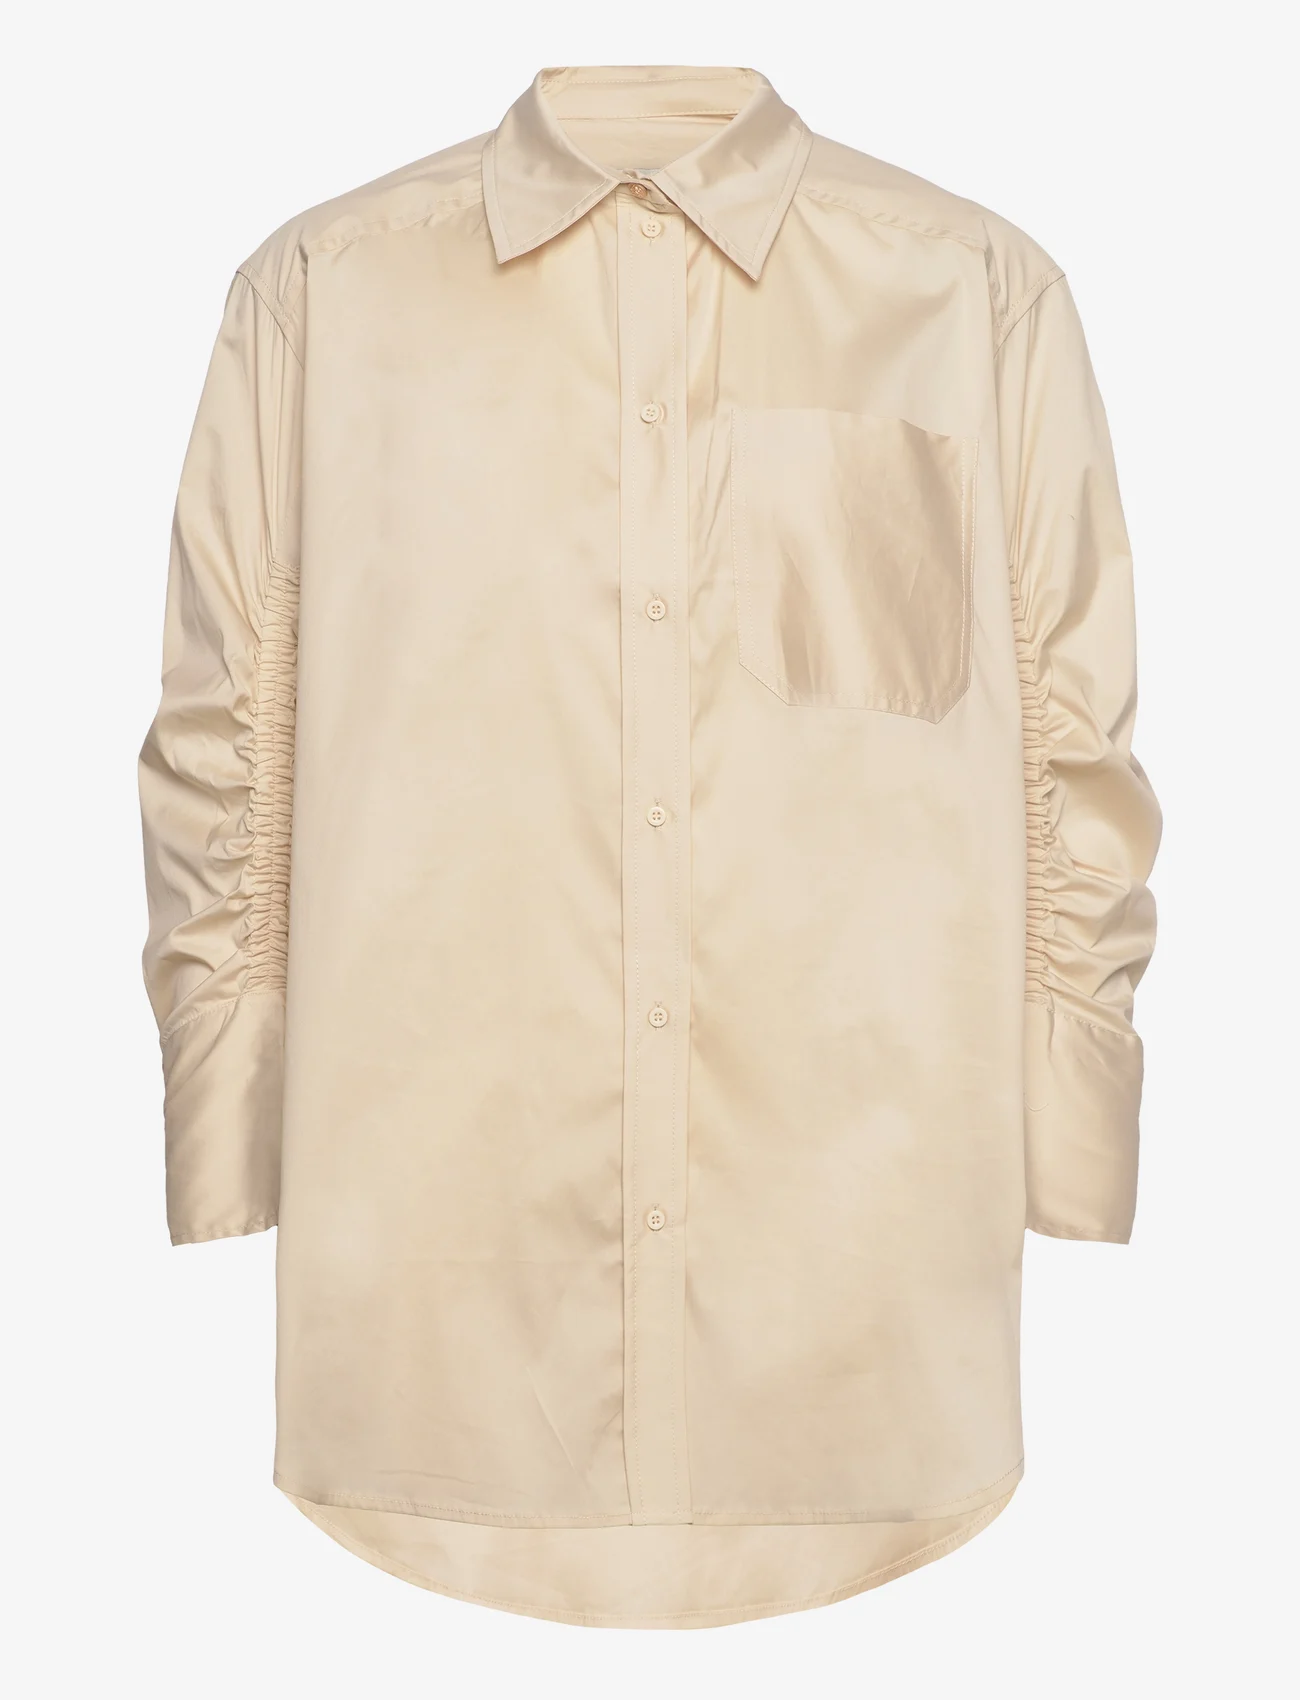 Munthe - JADYN - långärmade skjortor - kit - 0